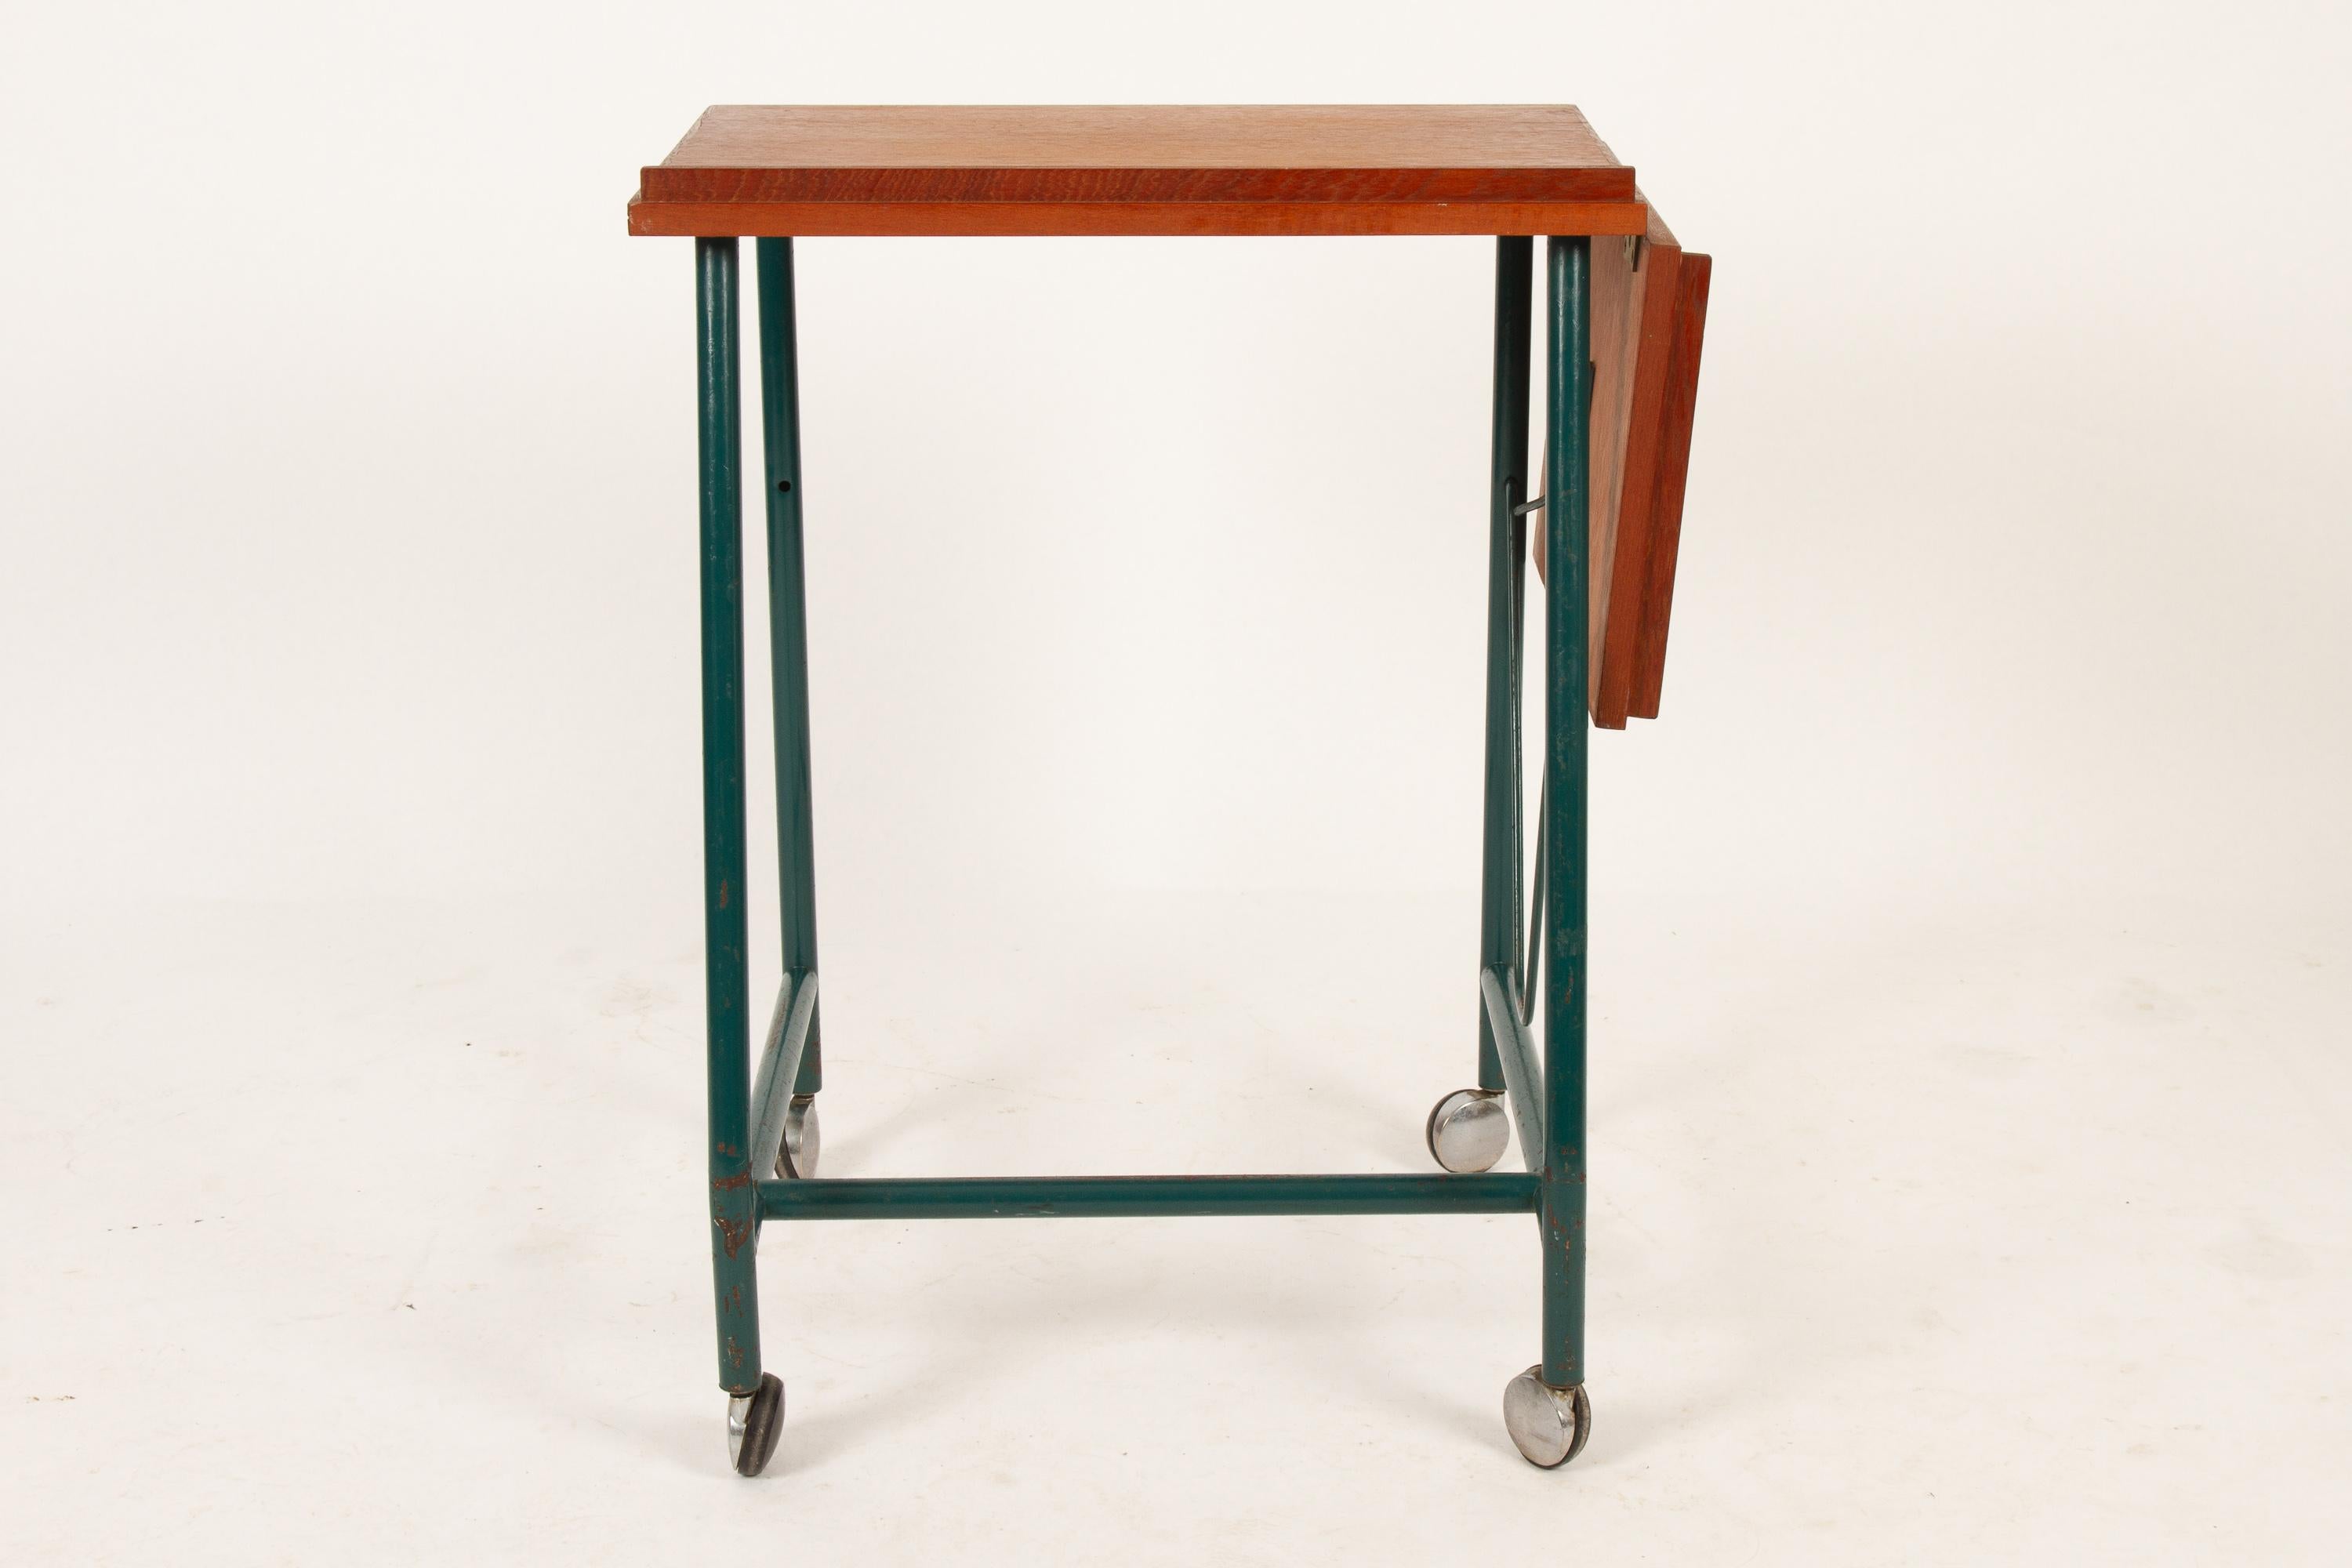 Scandinavian Modern Danish Teak Side Table with Green Metal Frame, 1960s